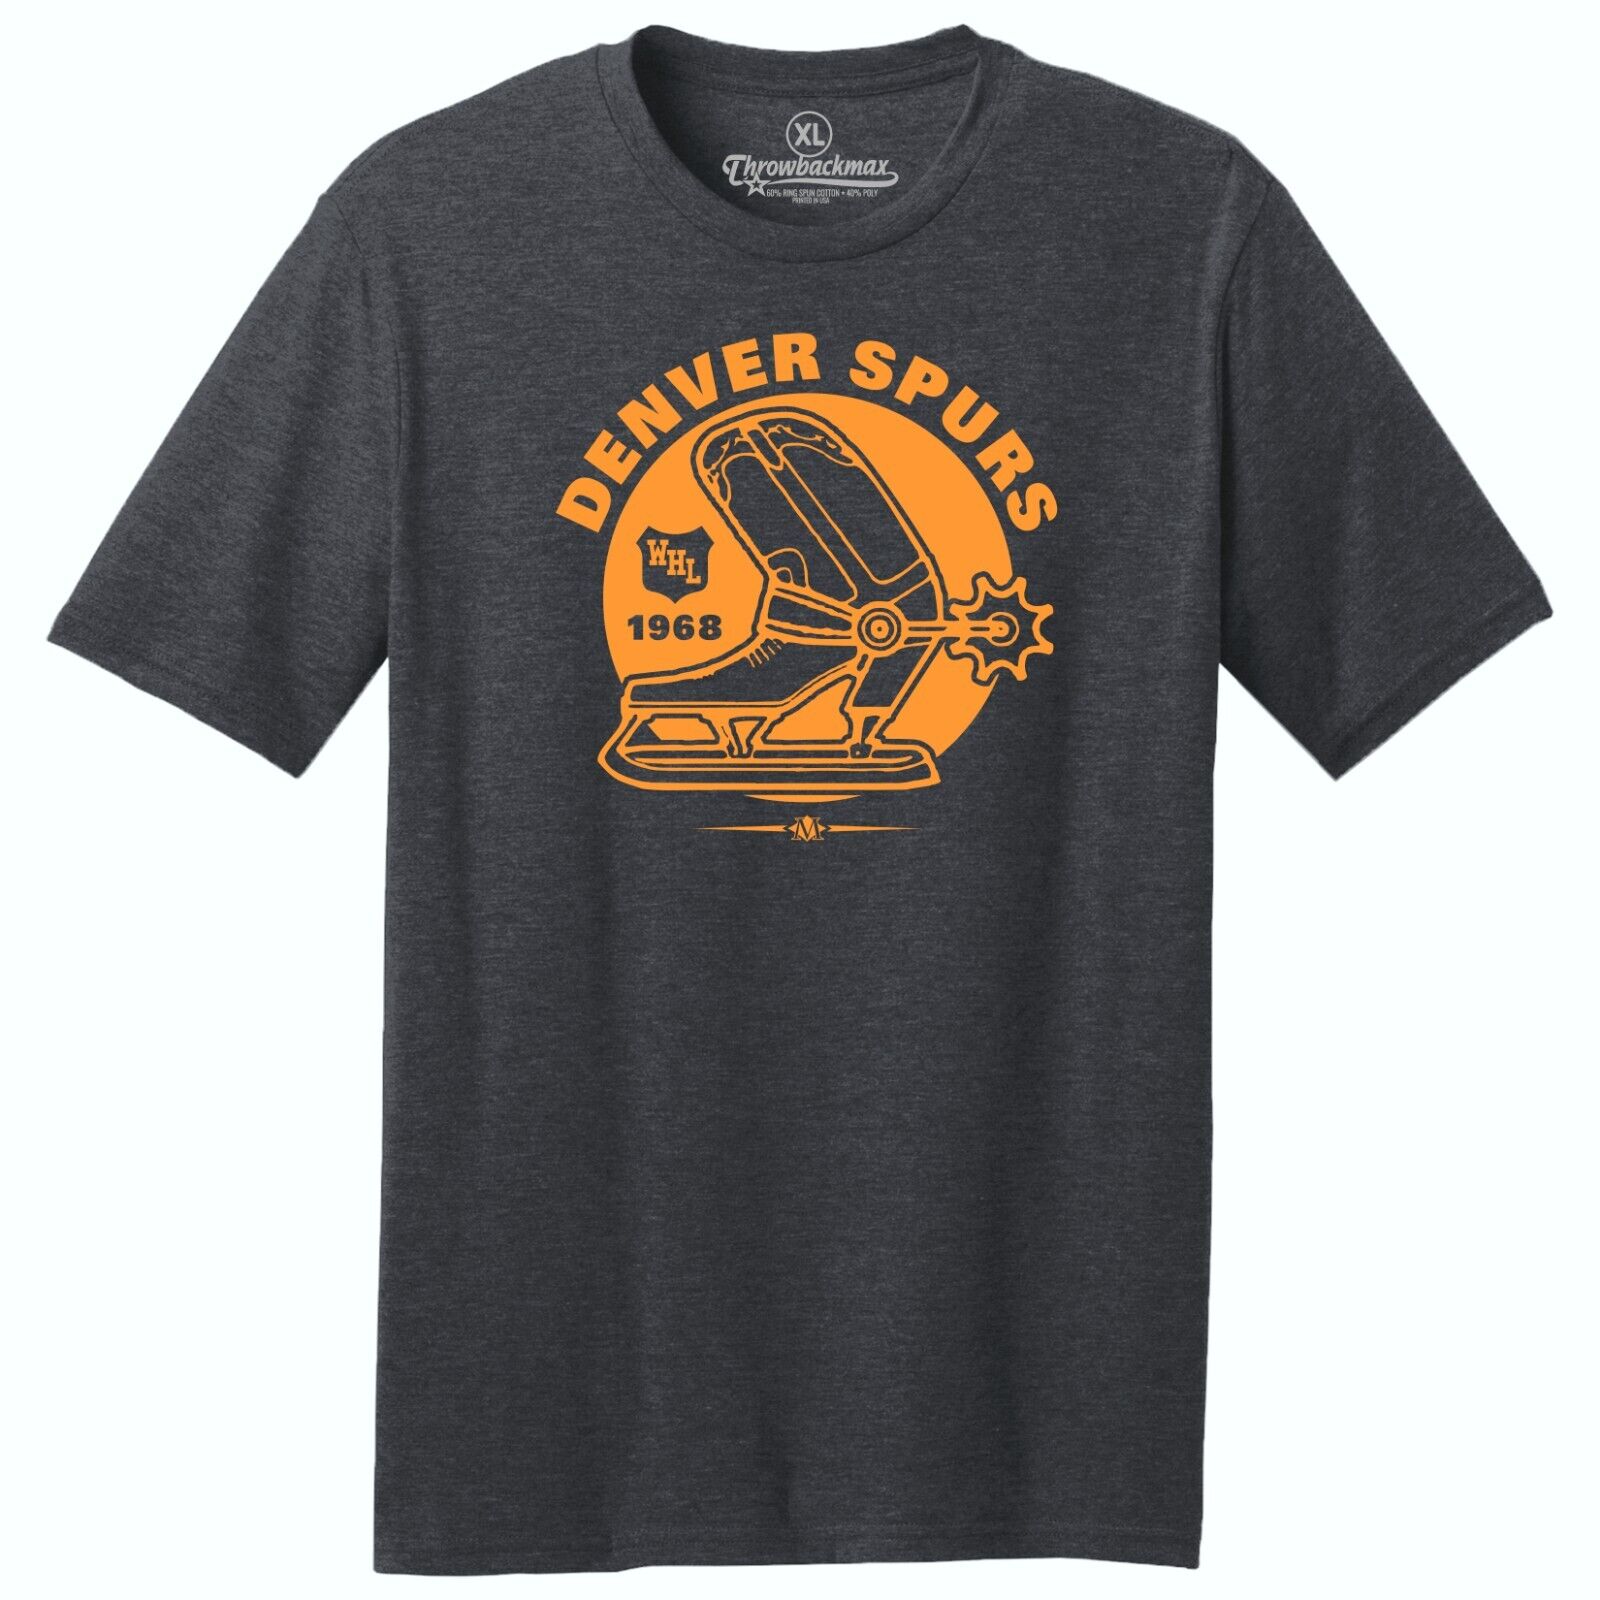 Denver Spurs 1968 WHL Hockey TRI-BLEND Tee Shirt - Colorado Avalanche